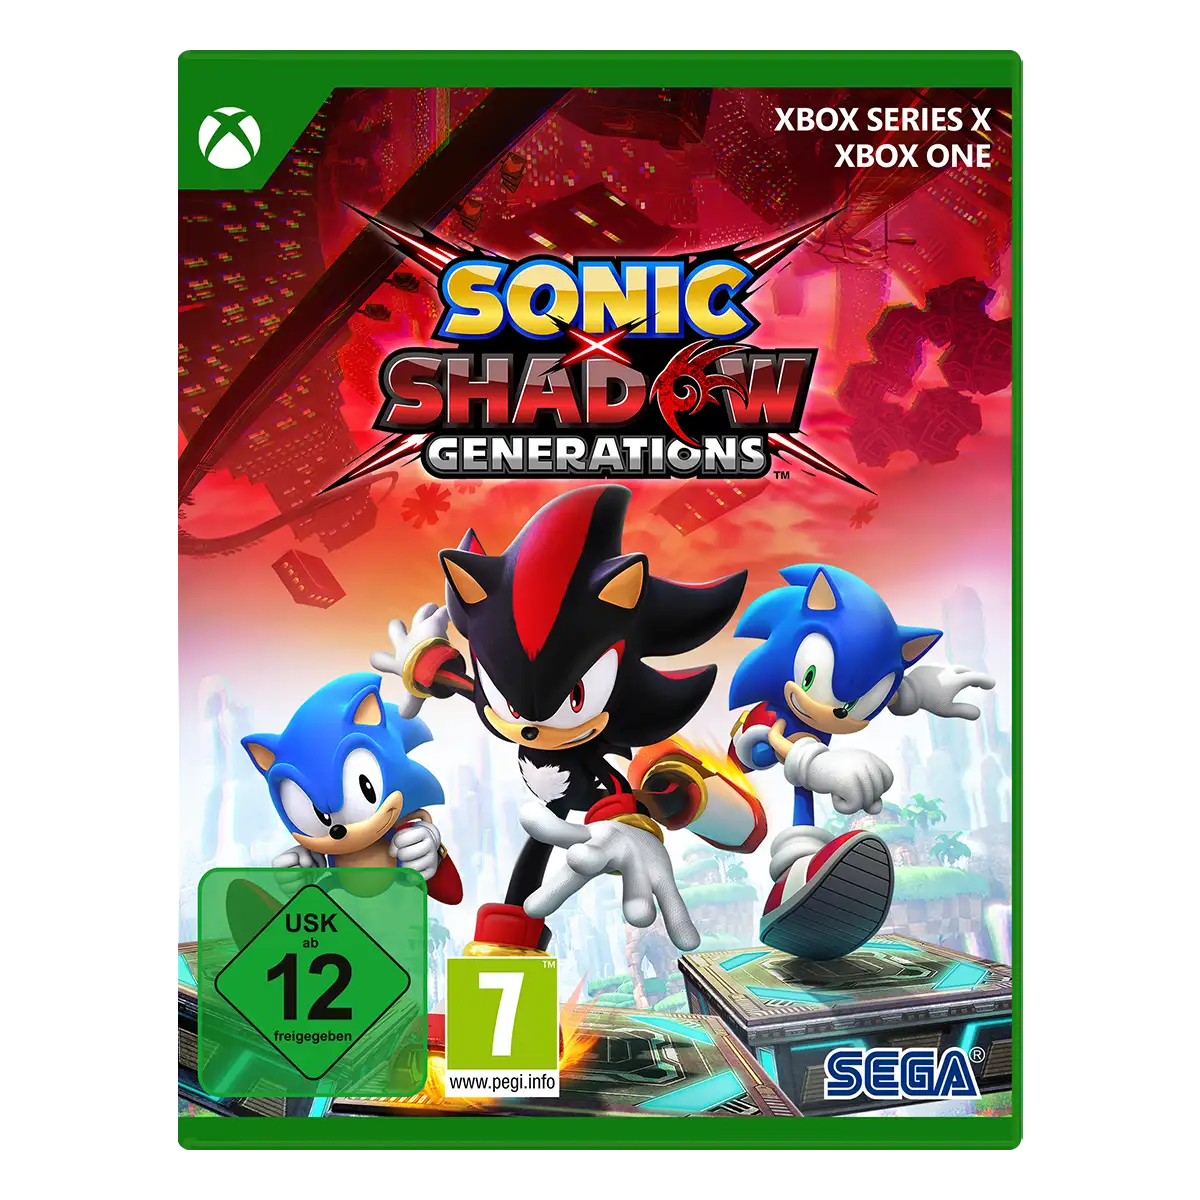 Sonic x Shadow Generations (XONE/XSRX) Cover